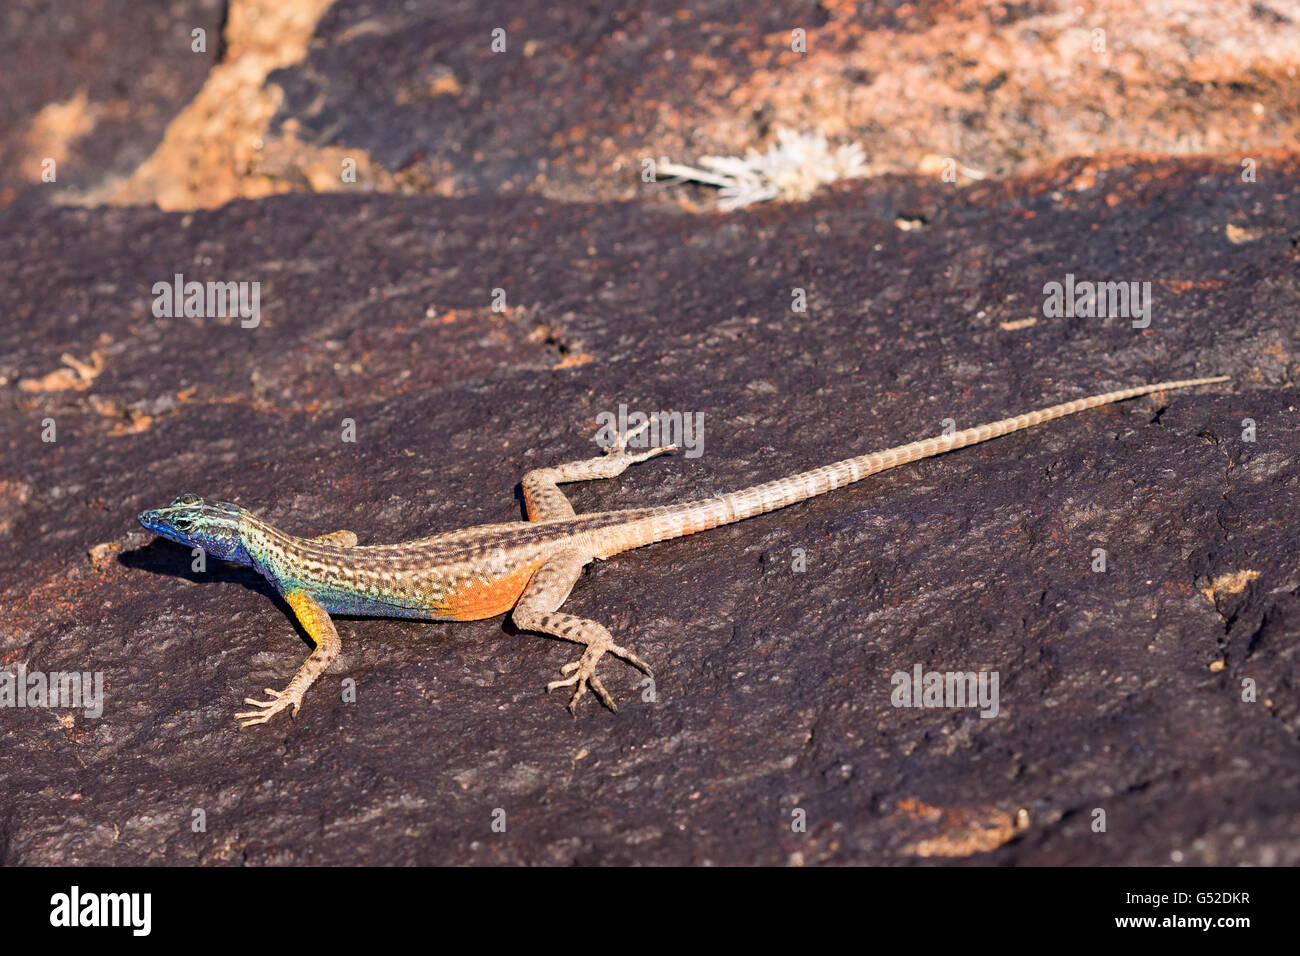 South Africa, North Cape, Benede Oranje, Augrabies Falls National Park, Lizard on Rock, Platysaurus Broadleyi Stock Photo